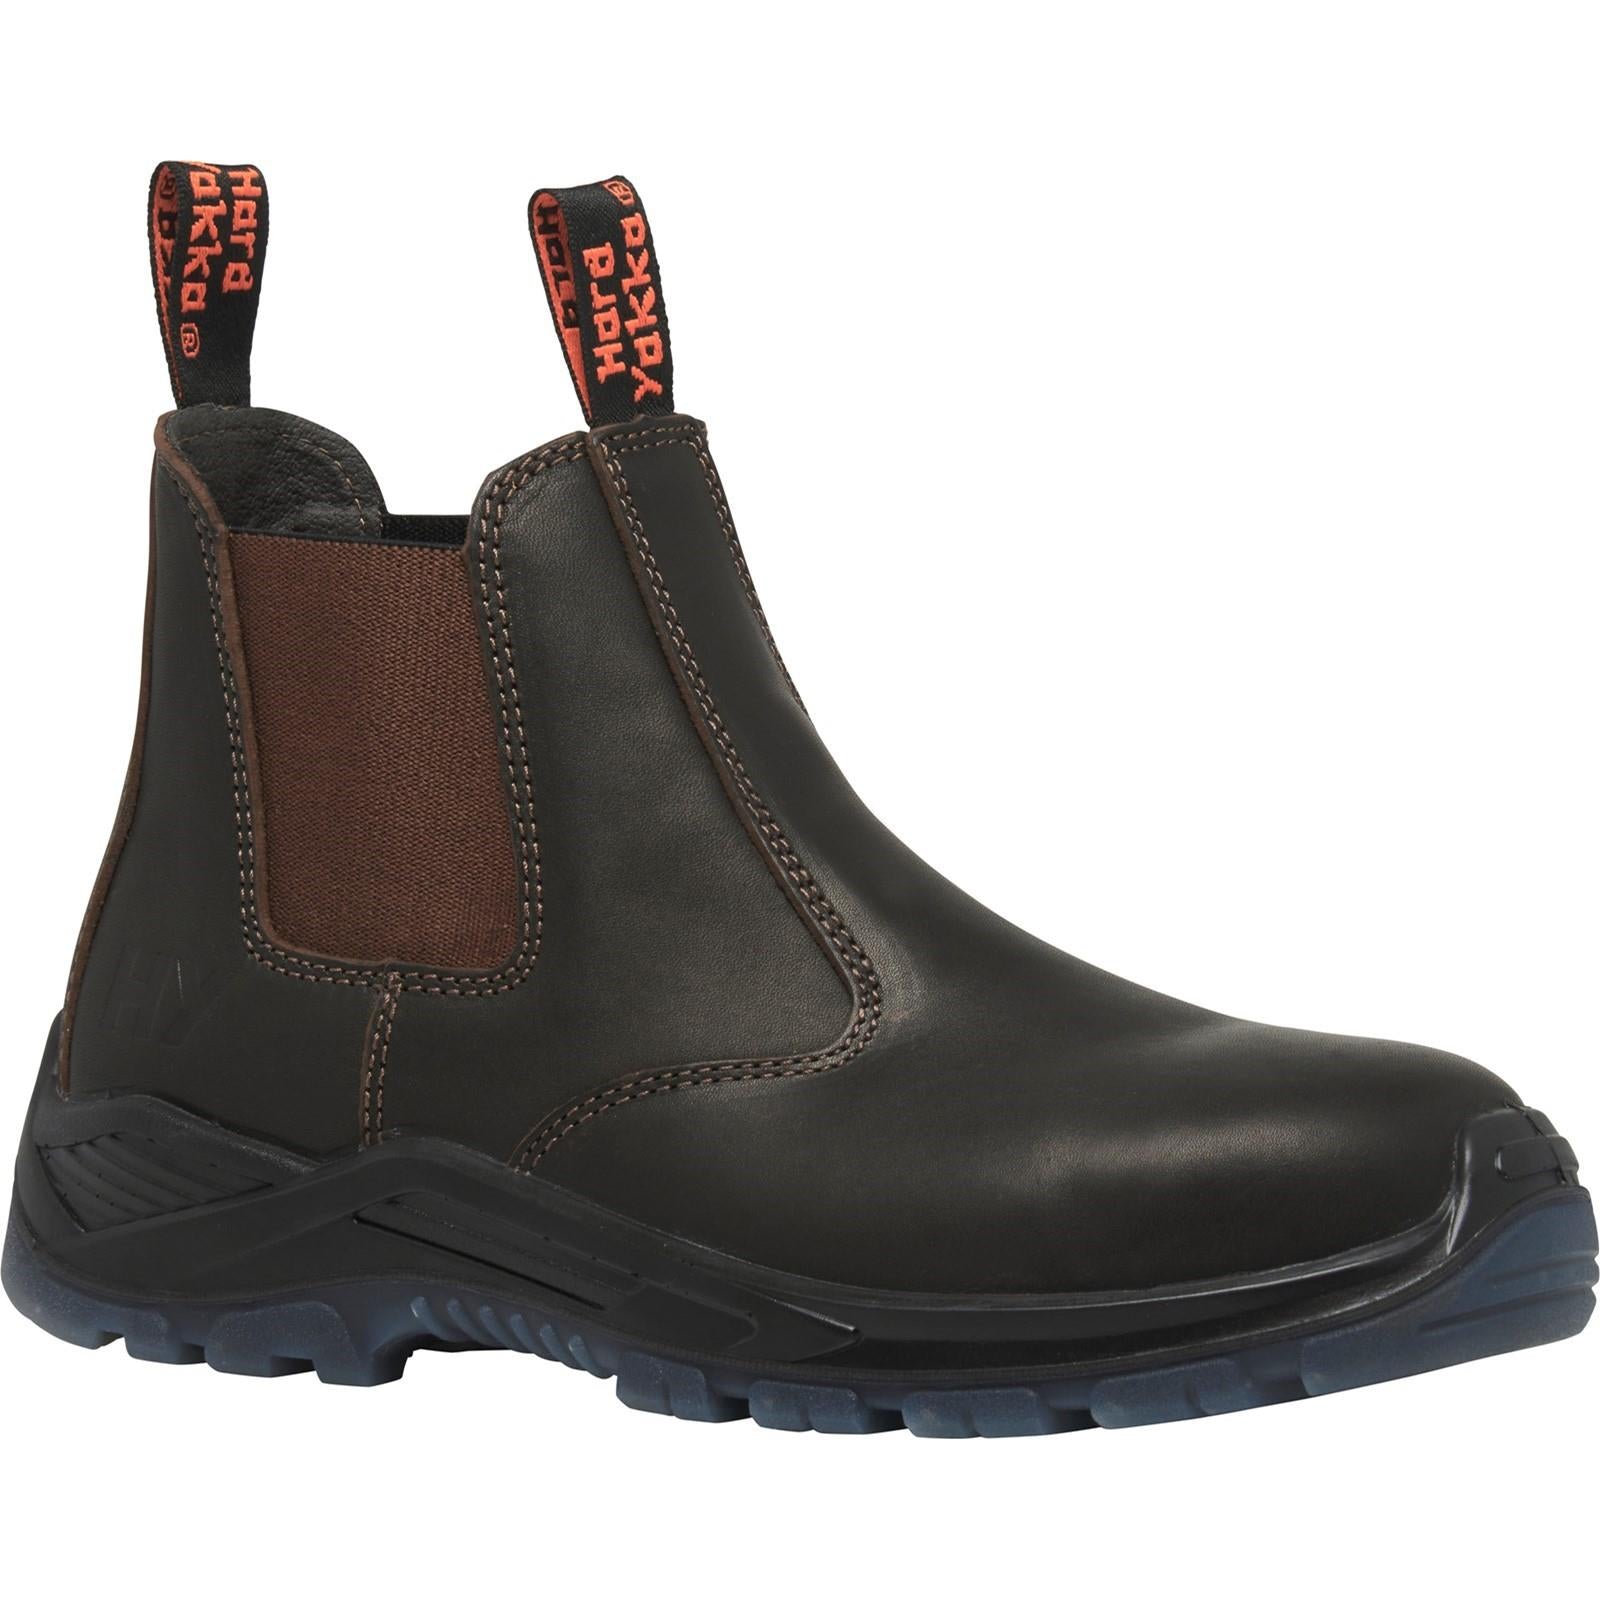 Hard Yakka Banjo brown leather steel toe-cap men's safety dealer work boot